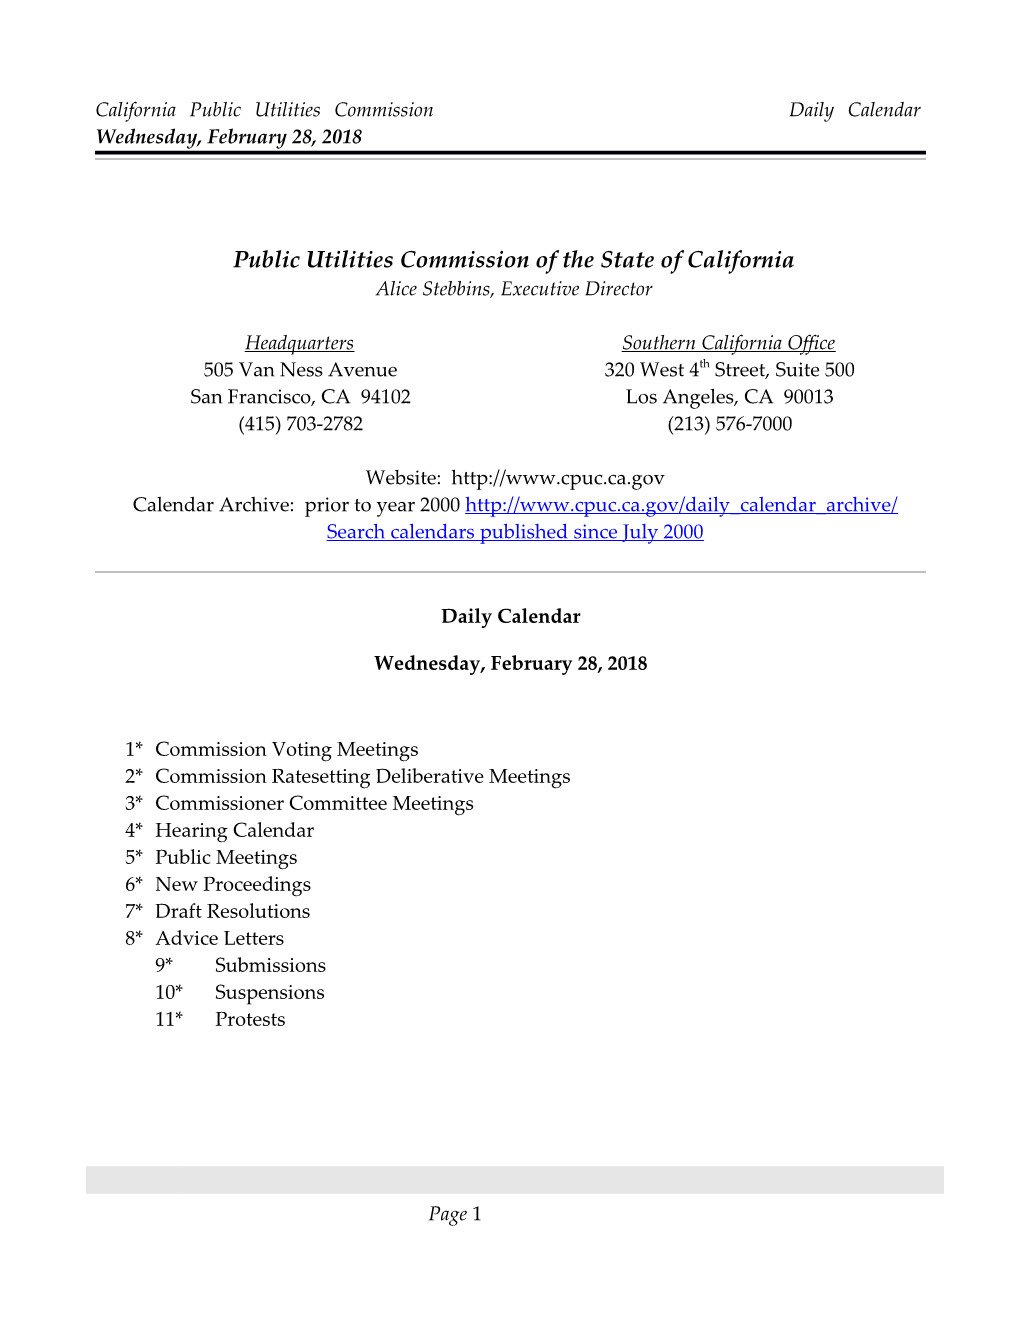 California Public Utilities Commission Daily Calendar Wednesday, February 28, 2018